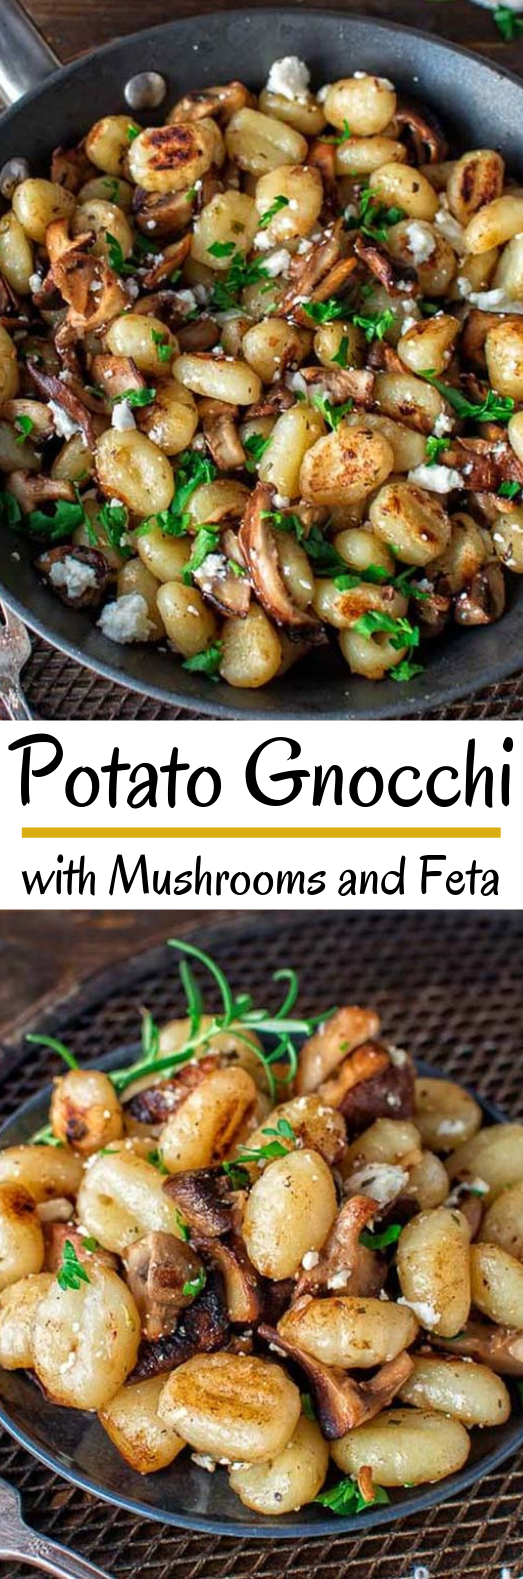 Potato Gnocchi with Mushrooms and Feta #vegetarian #dinner